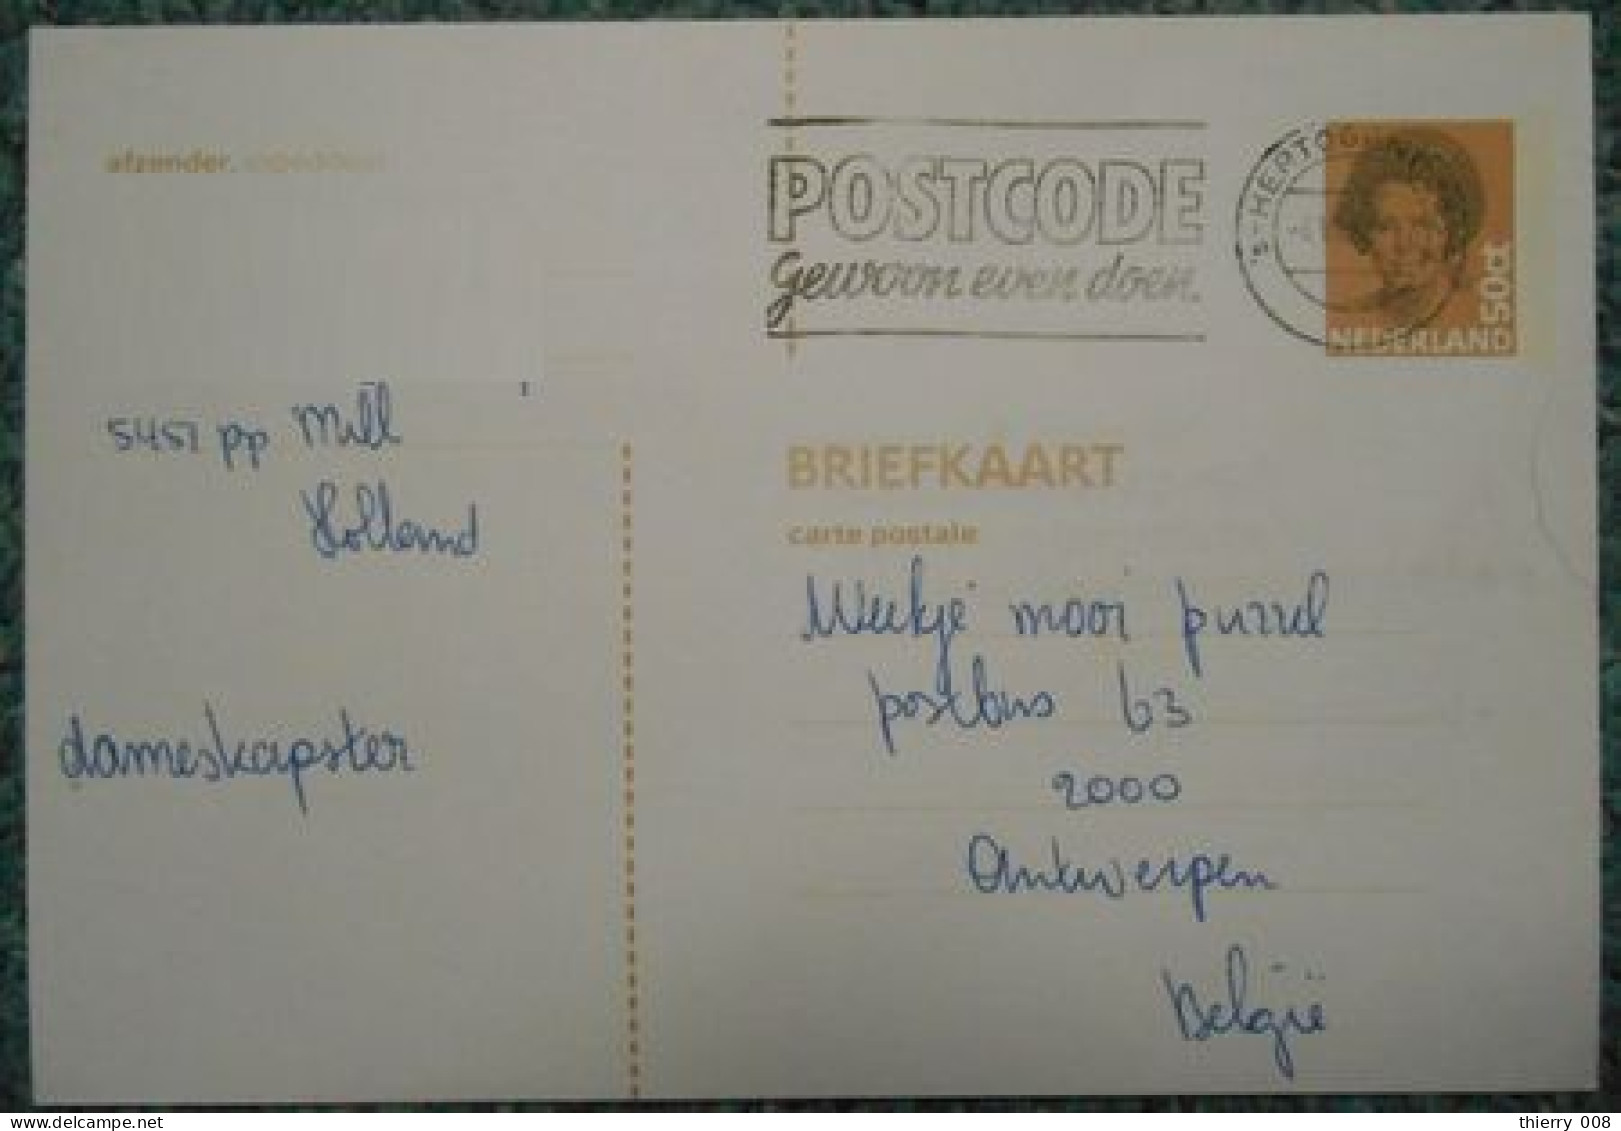 105- PAP Carte Nederland Pays-Bas Oblitération Postcode Gewoon Even Doen - Letter Cards